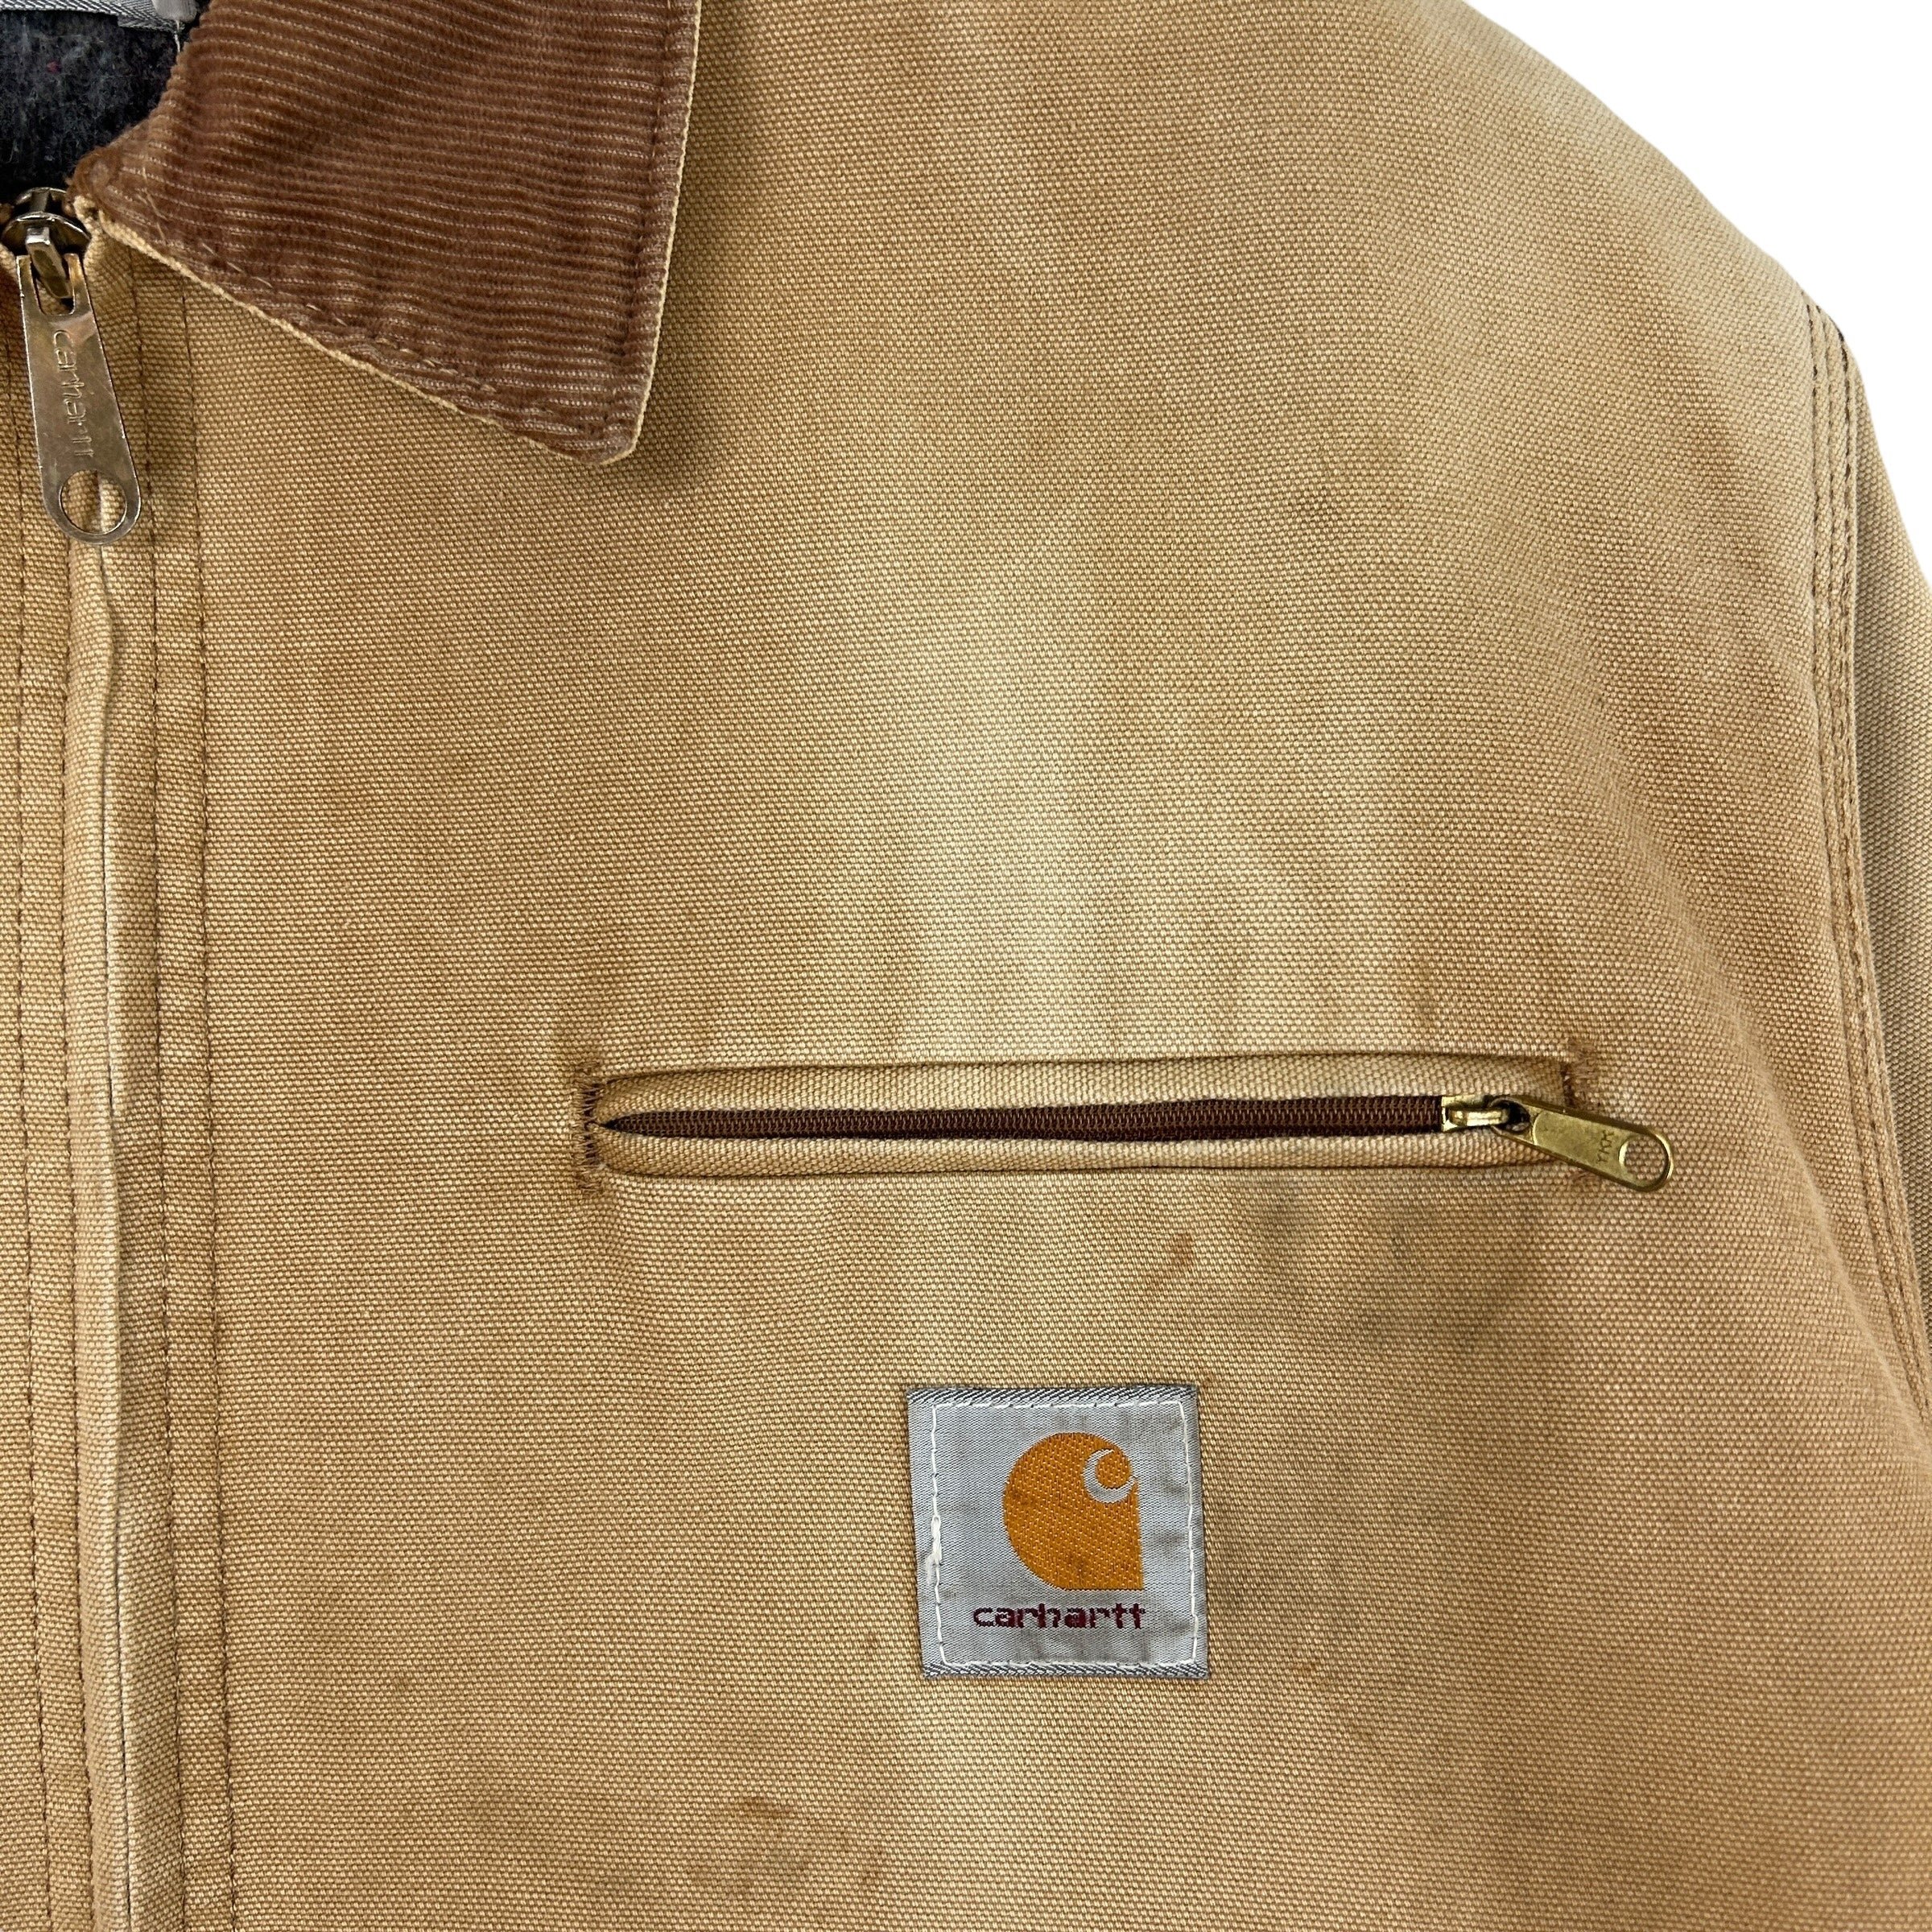 Vintage Carhartt Detroit Work Jacket Tan